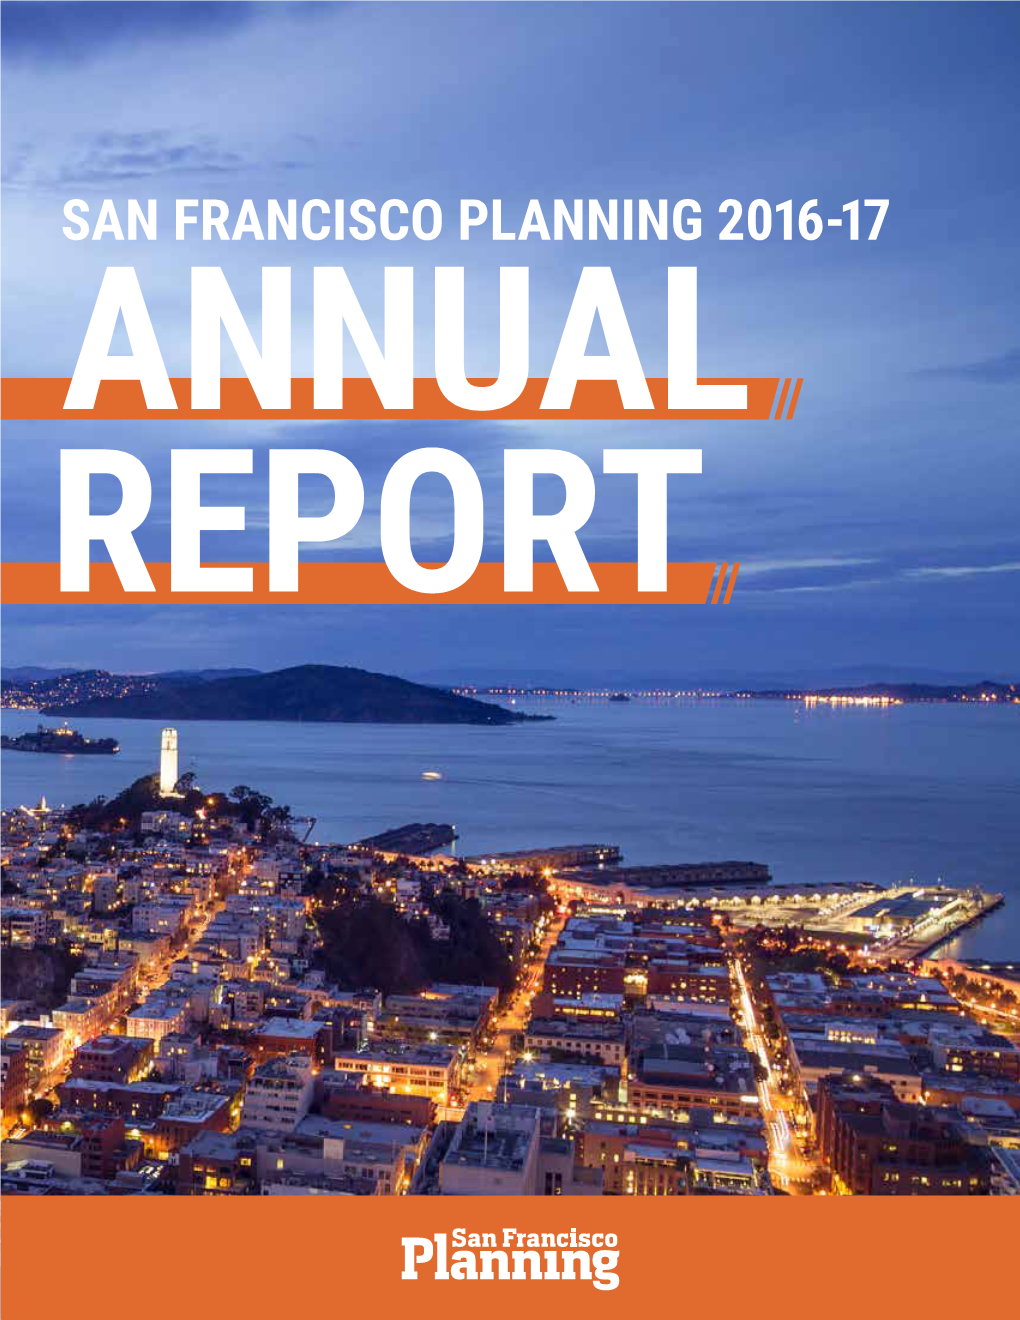 SAN FRANCISCO PLANNING 2016-17 ANNUAL REPORT San Francisco Planning Department Annual Report Fiscal Year July 1, 2016 - June 30, 2017